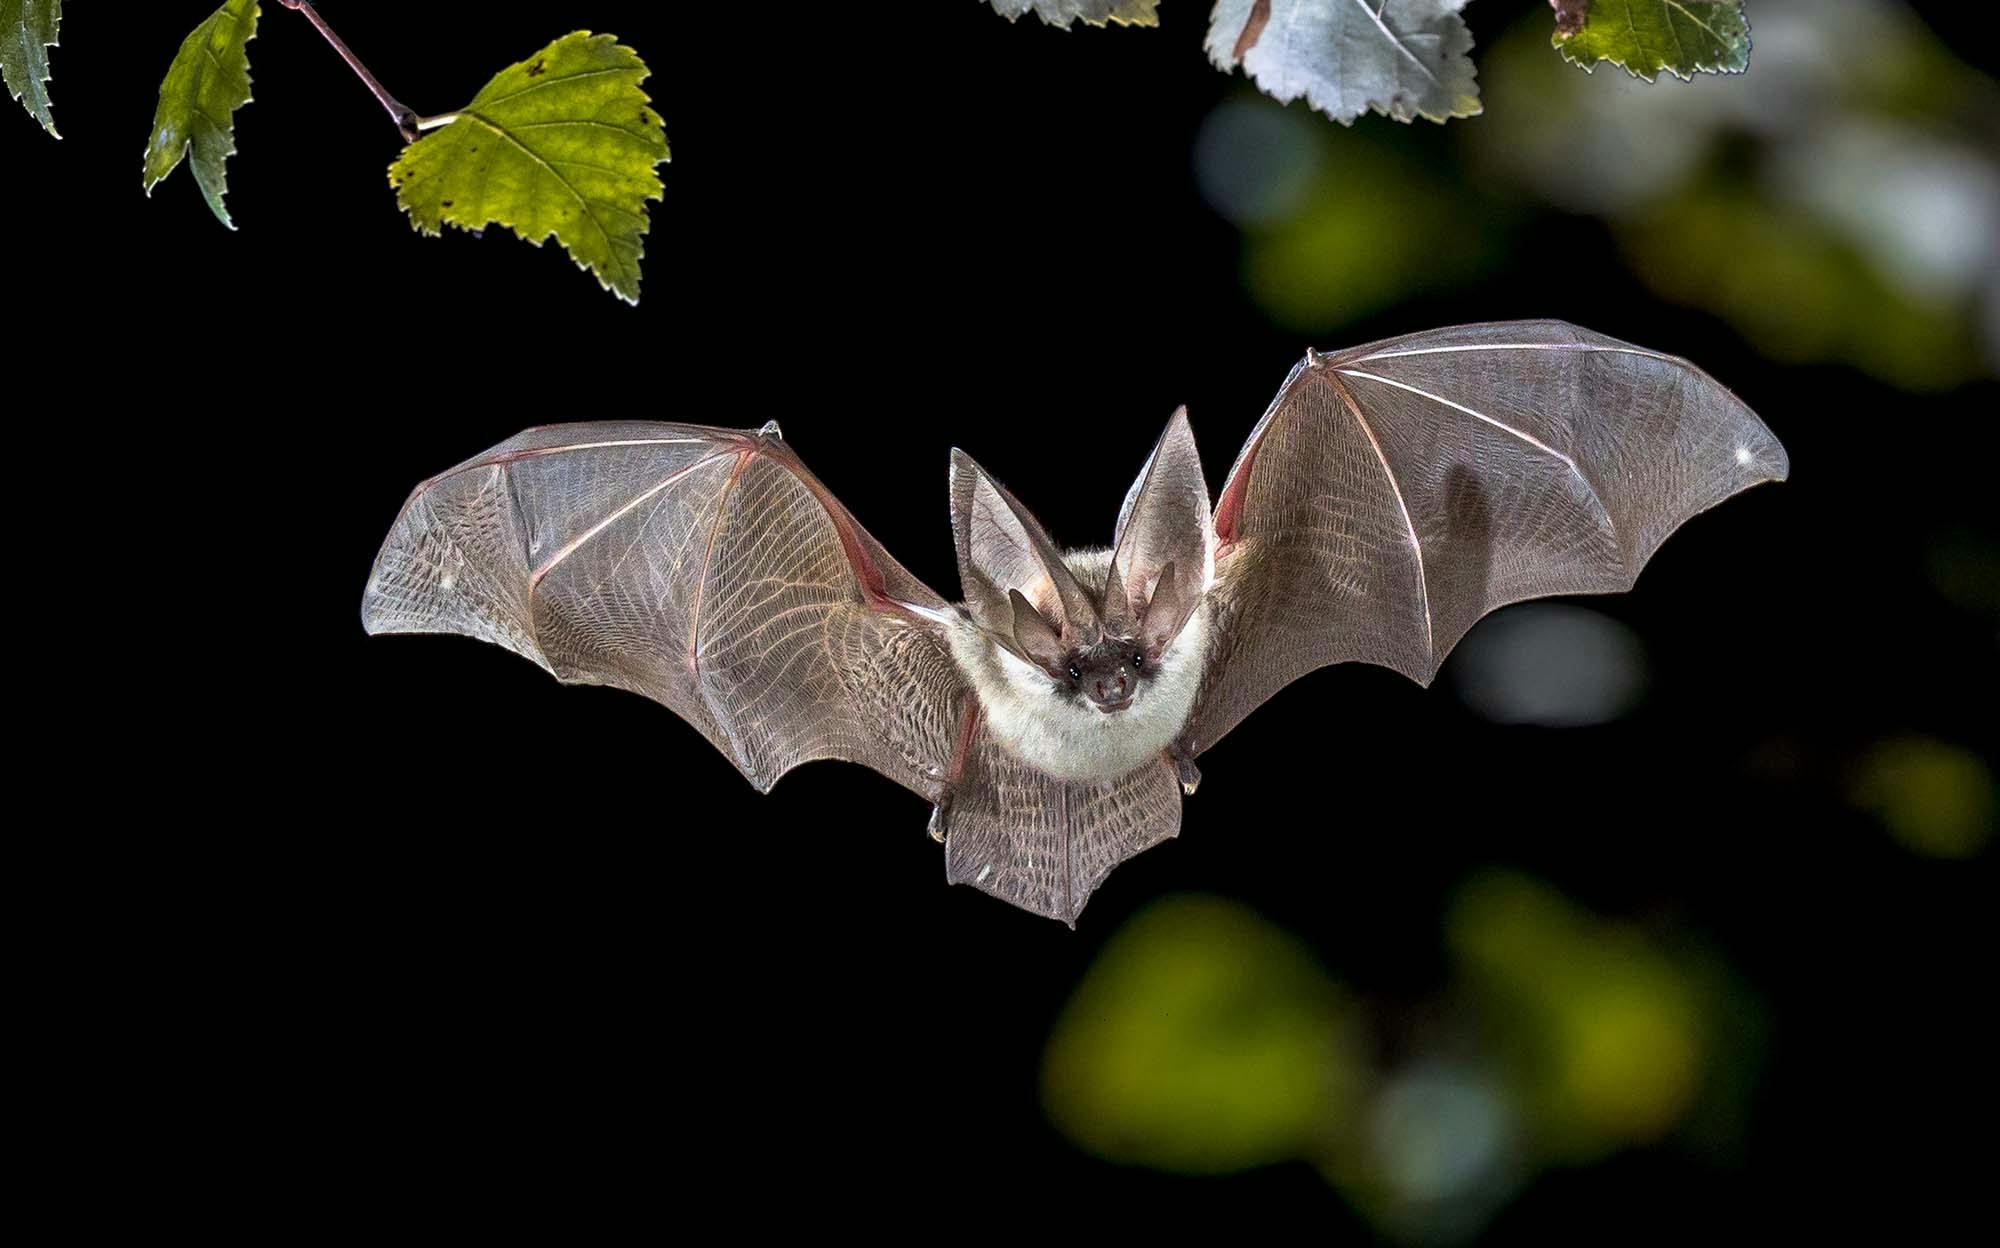 A close-up image of a flying bat (Photo: CreativeNature)